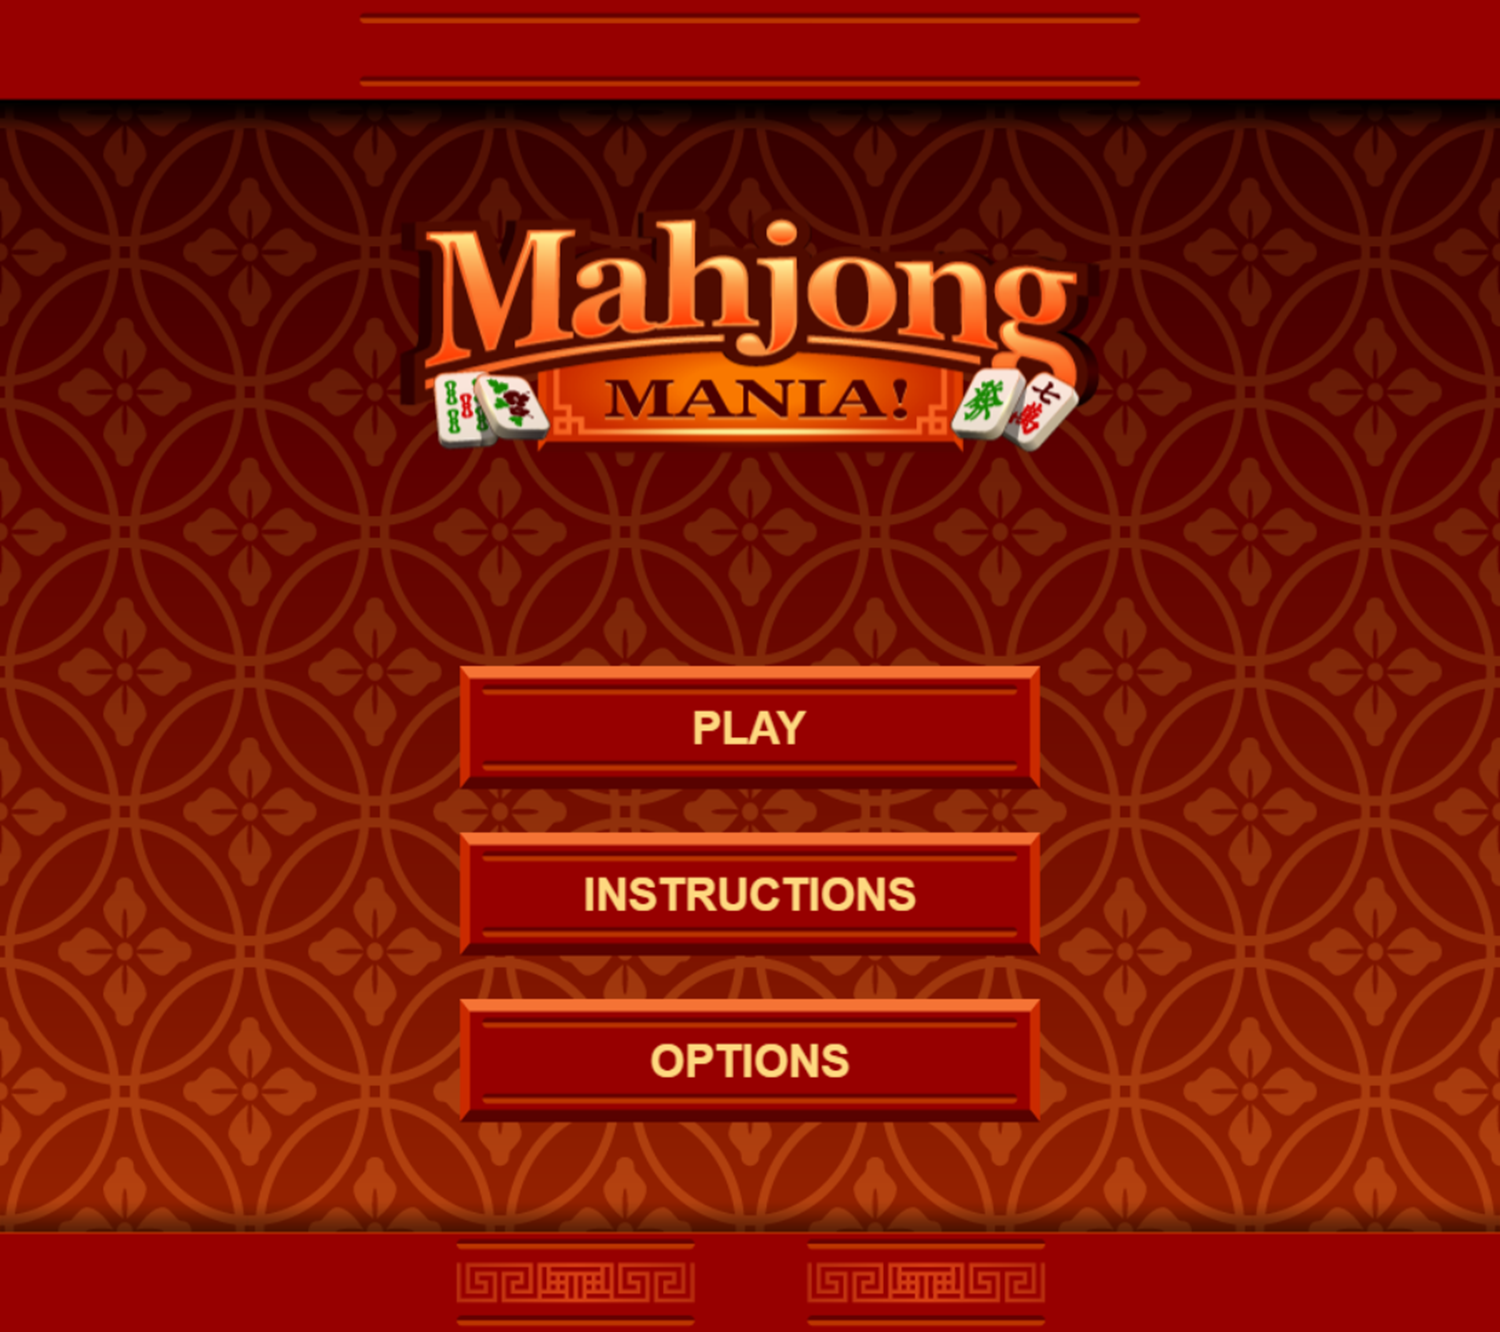 Mahjong Mania Game Welcome Screen Screenshot.